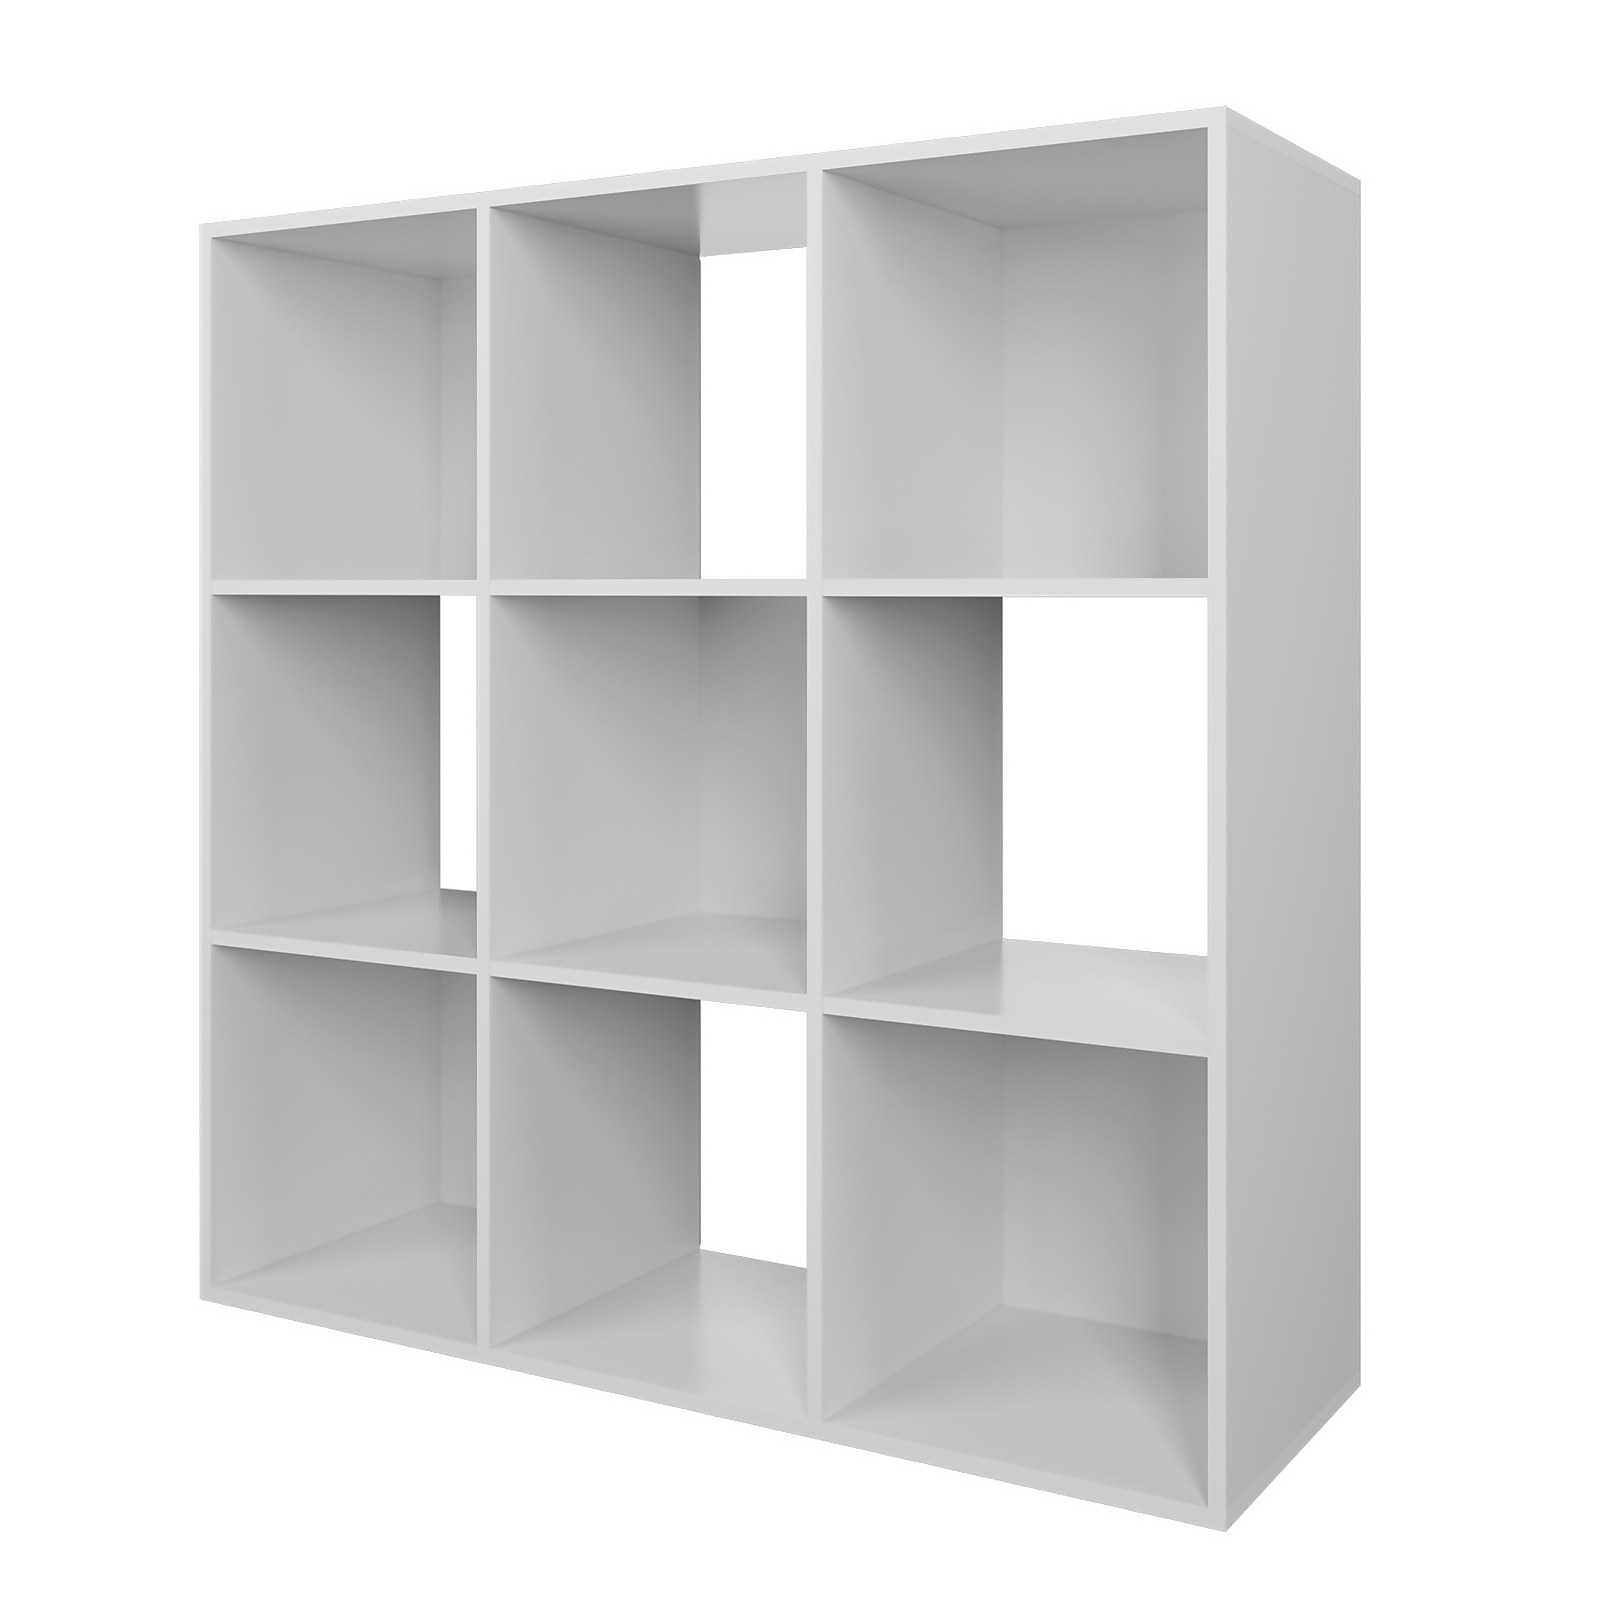 Photo of Compact Cube 3x3 Storage Unit - White